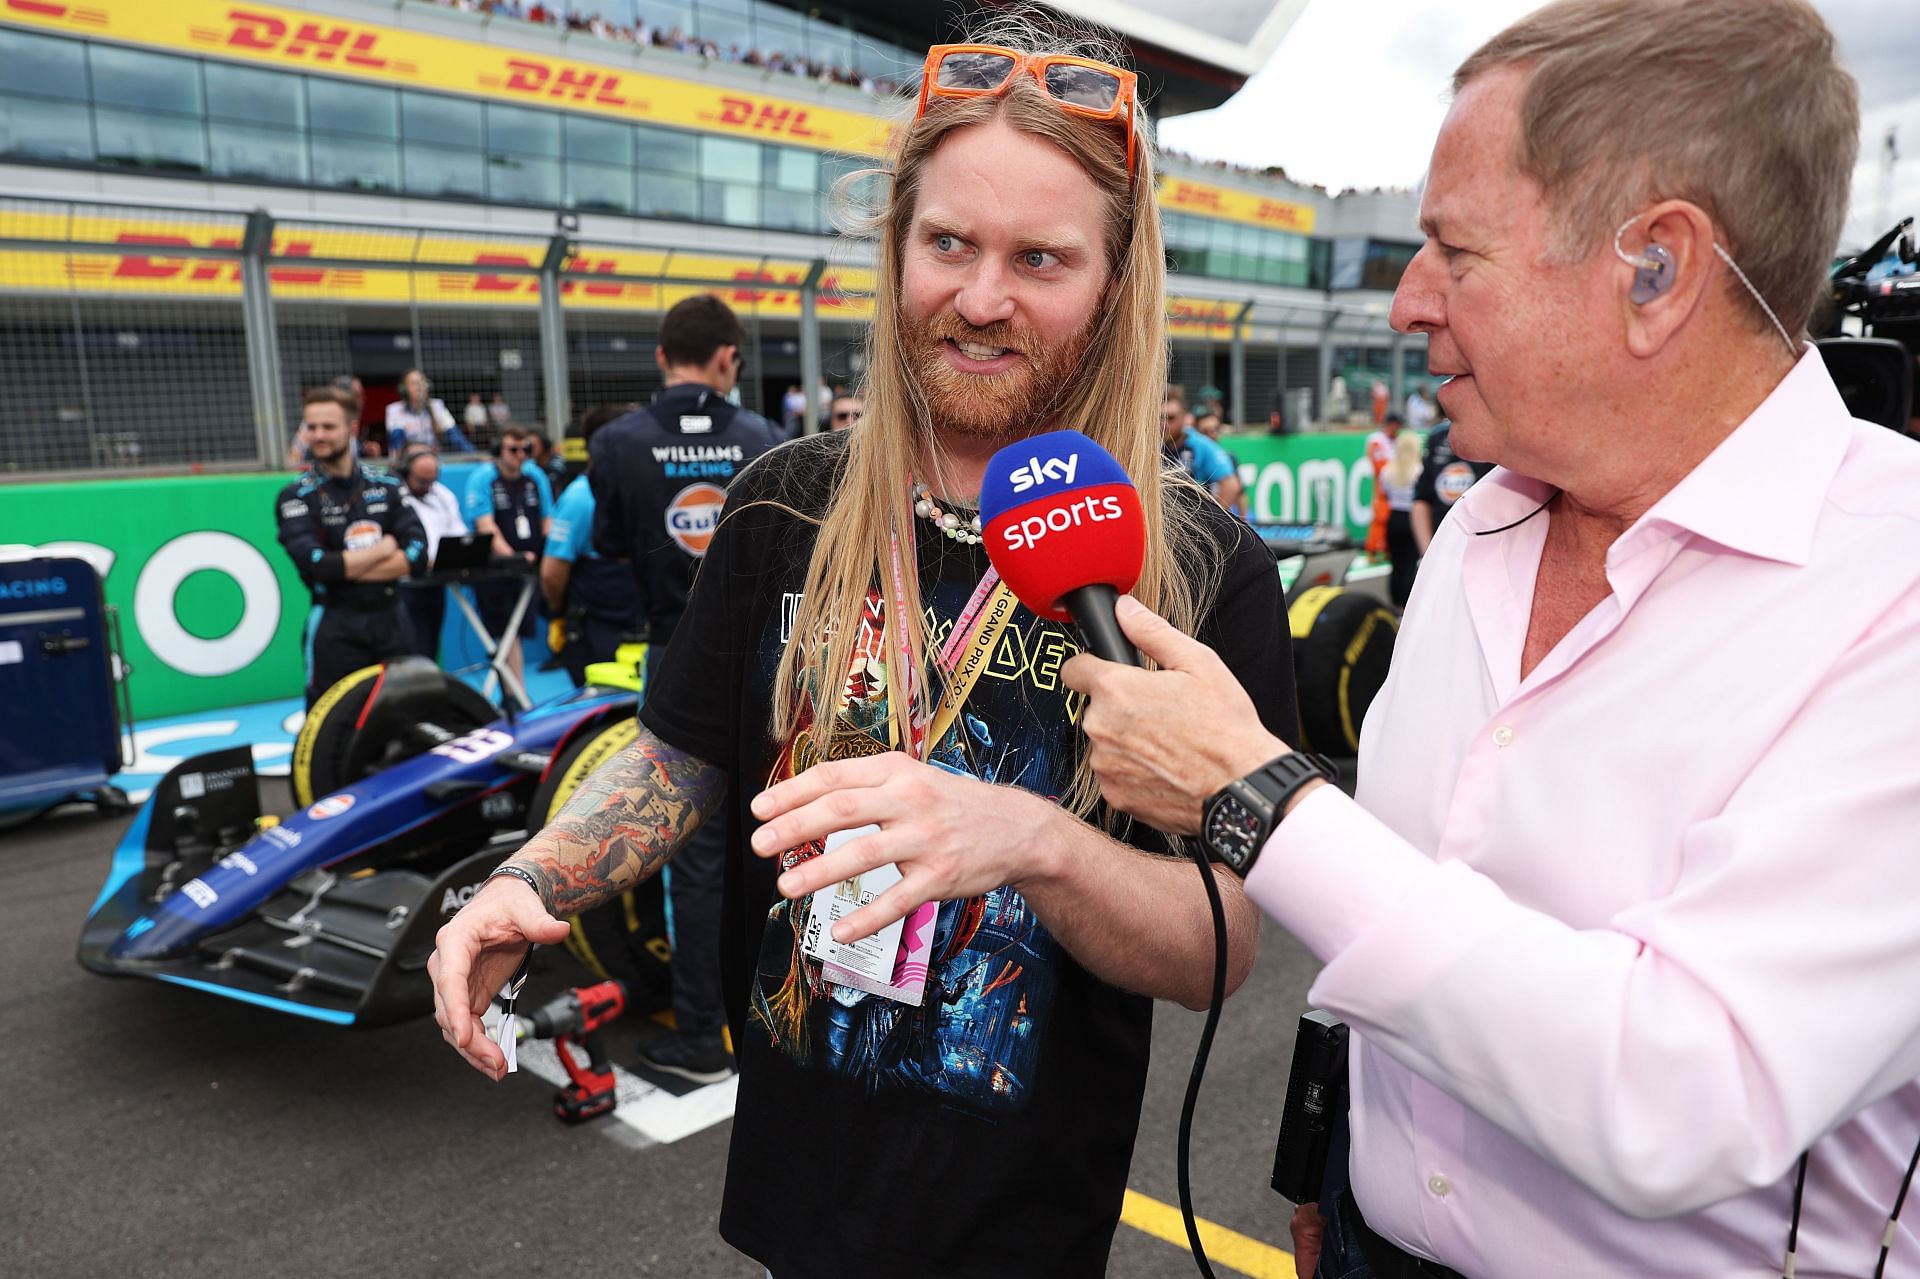 Martin Brumdle interviews Sam Ryder at the British GP Paddock (Photo by Ryan Pierse/Getty Images)